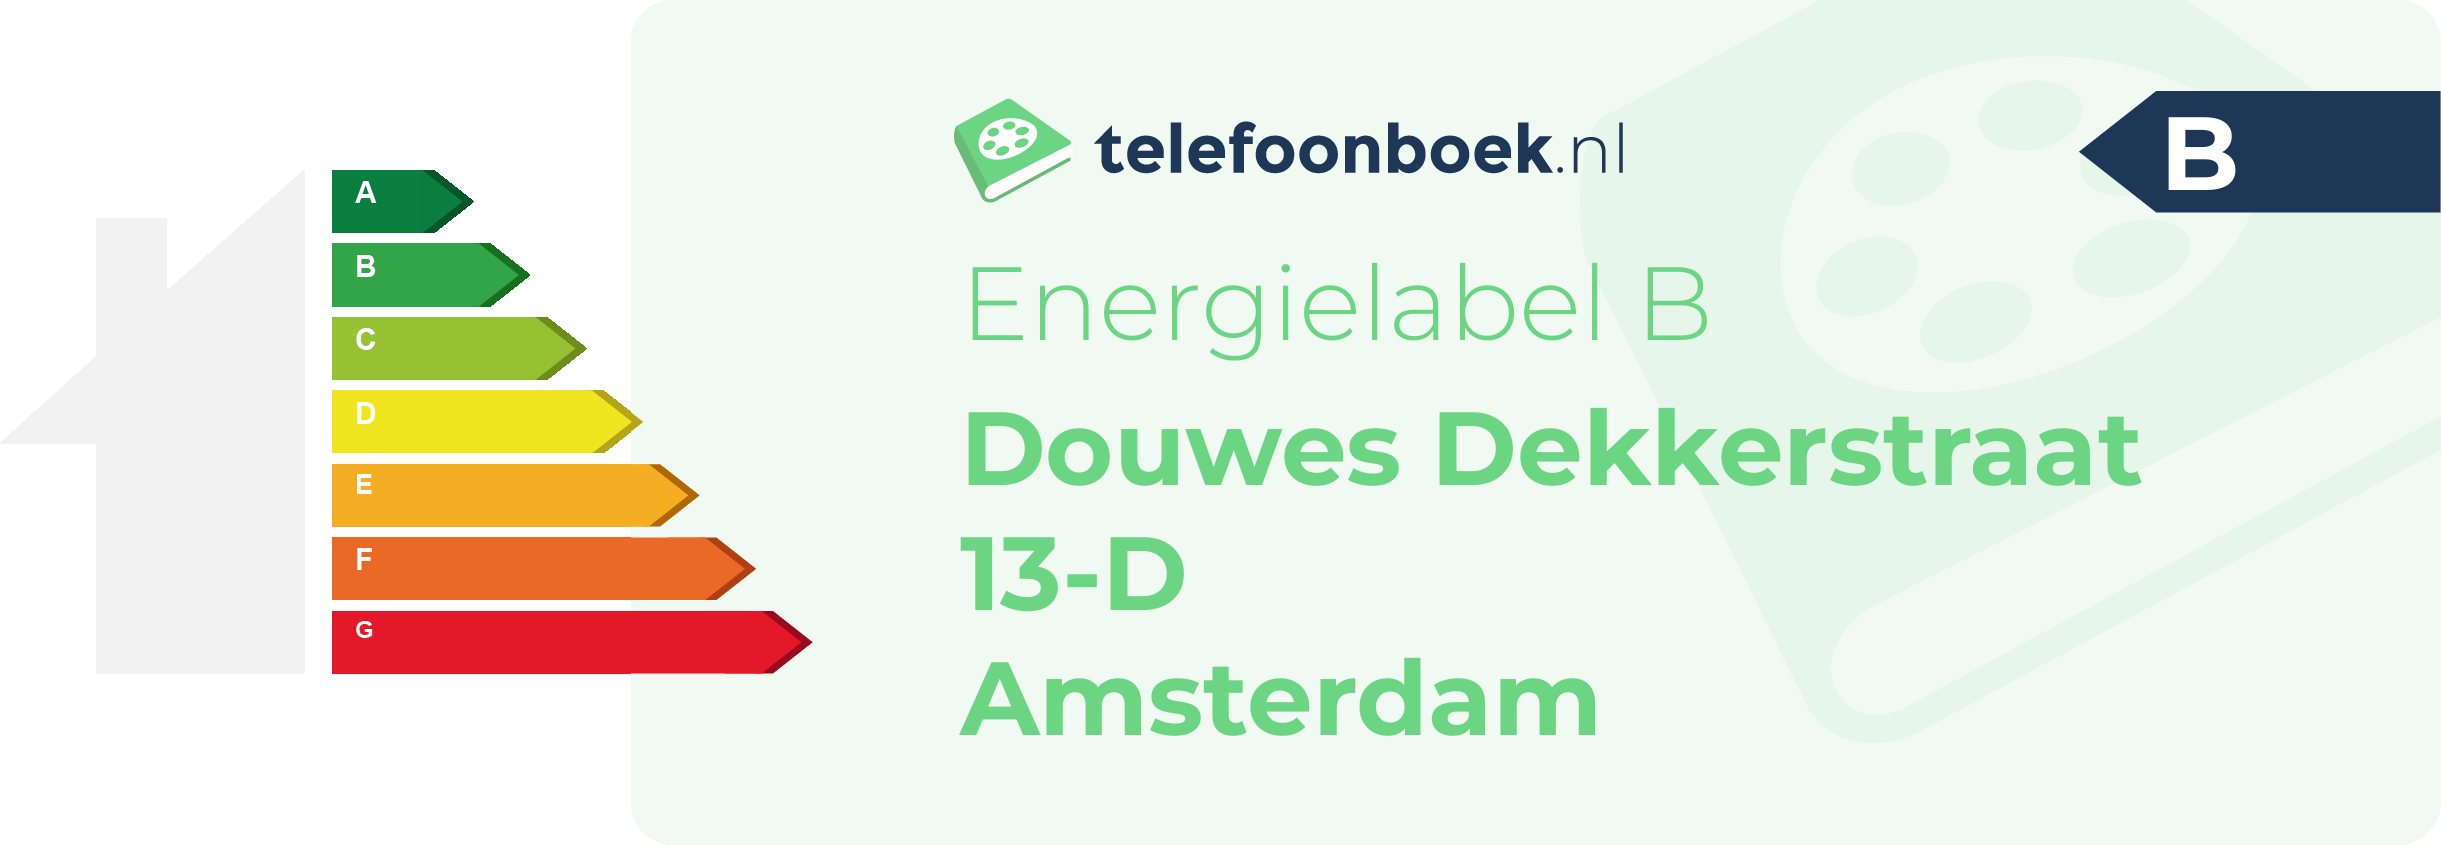 Energielabel Douwes Dekkerstraat 13-D Amsterdam